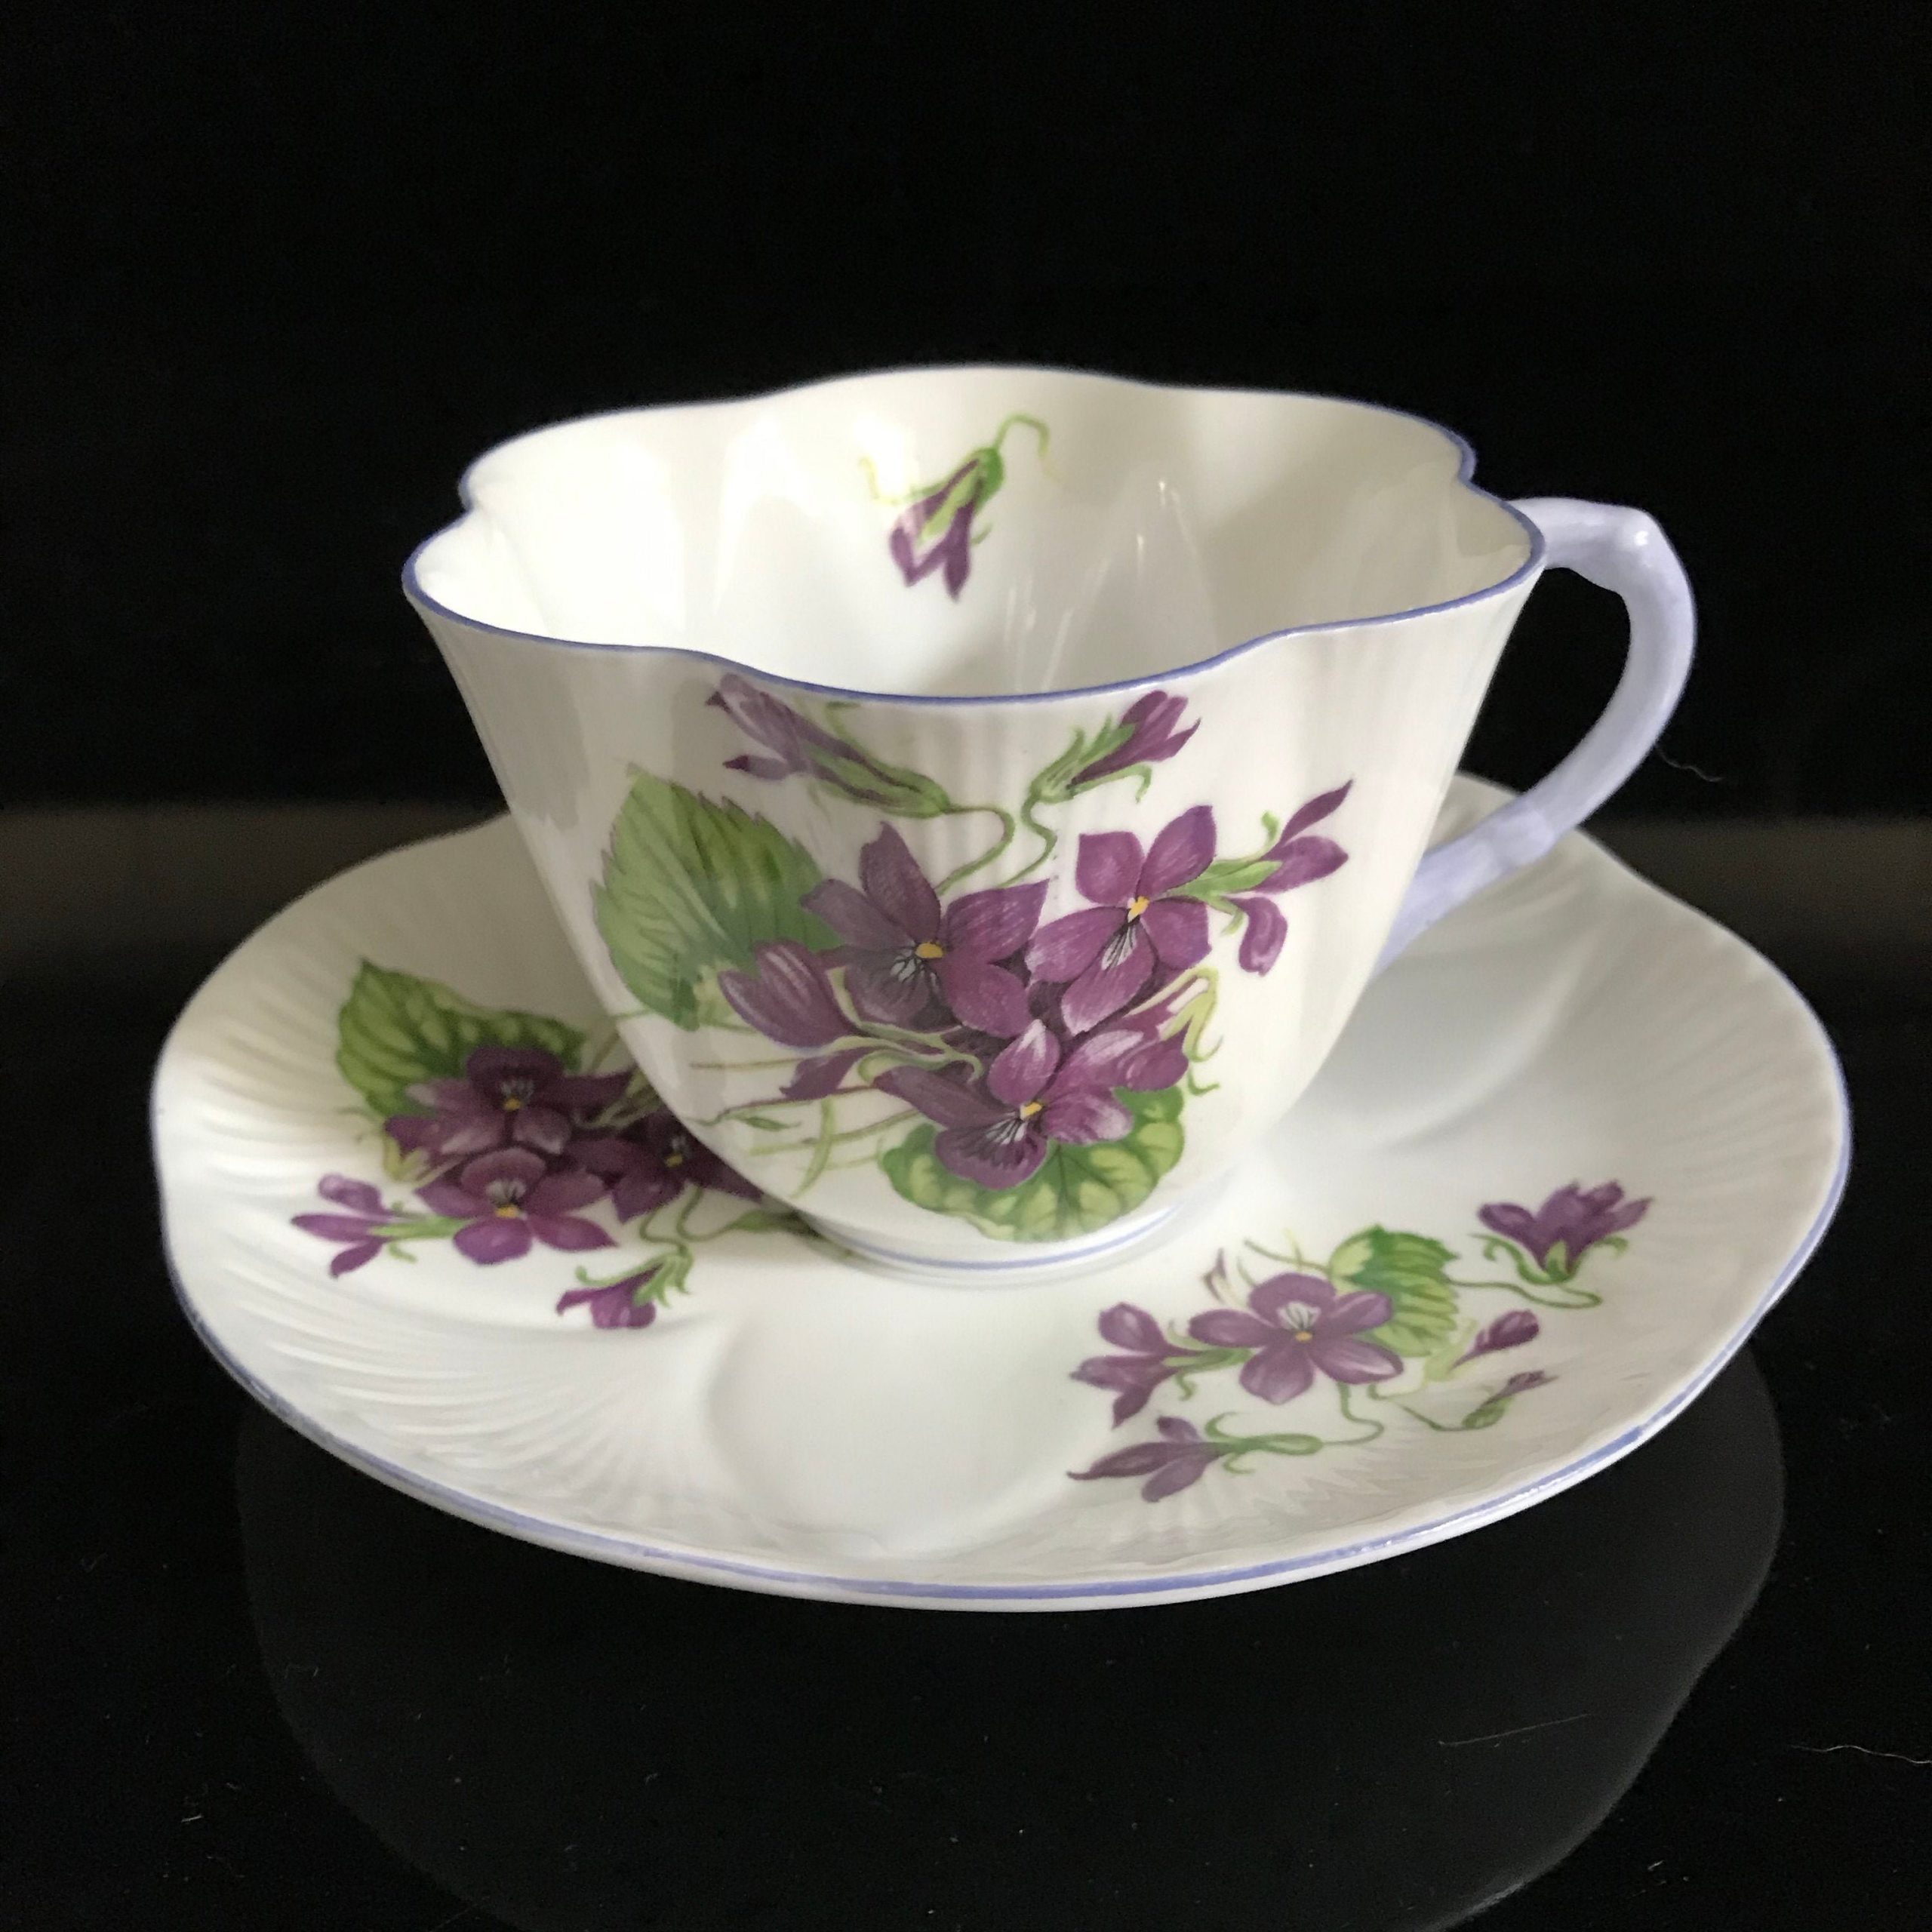 Lavender Turrell Mug Mugs & Teacups by undefined